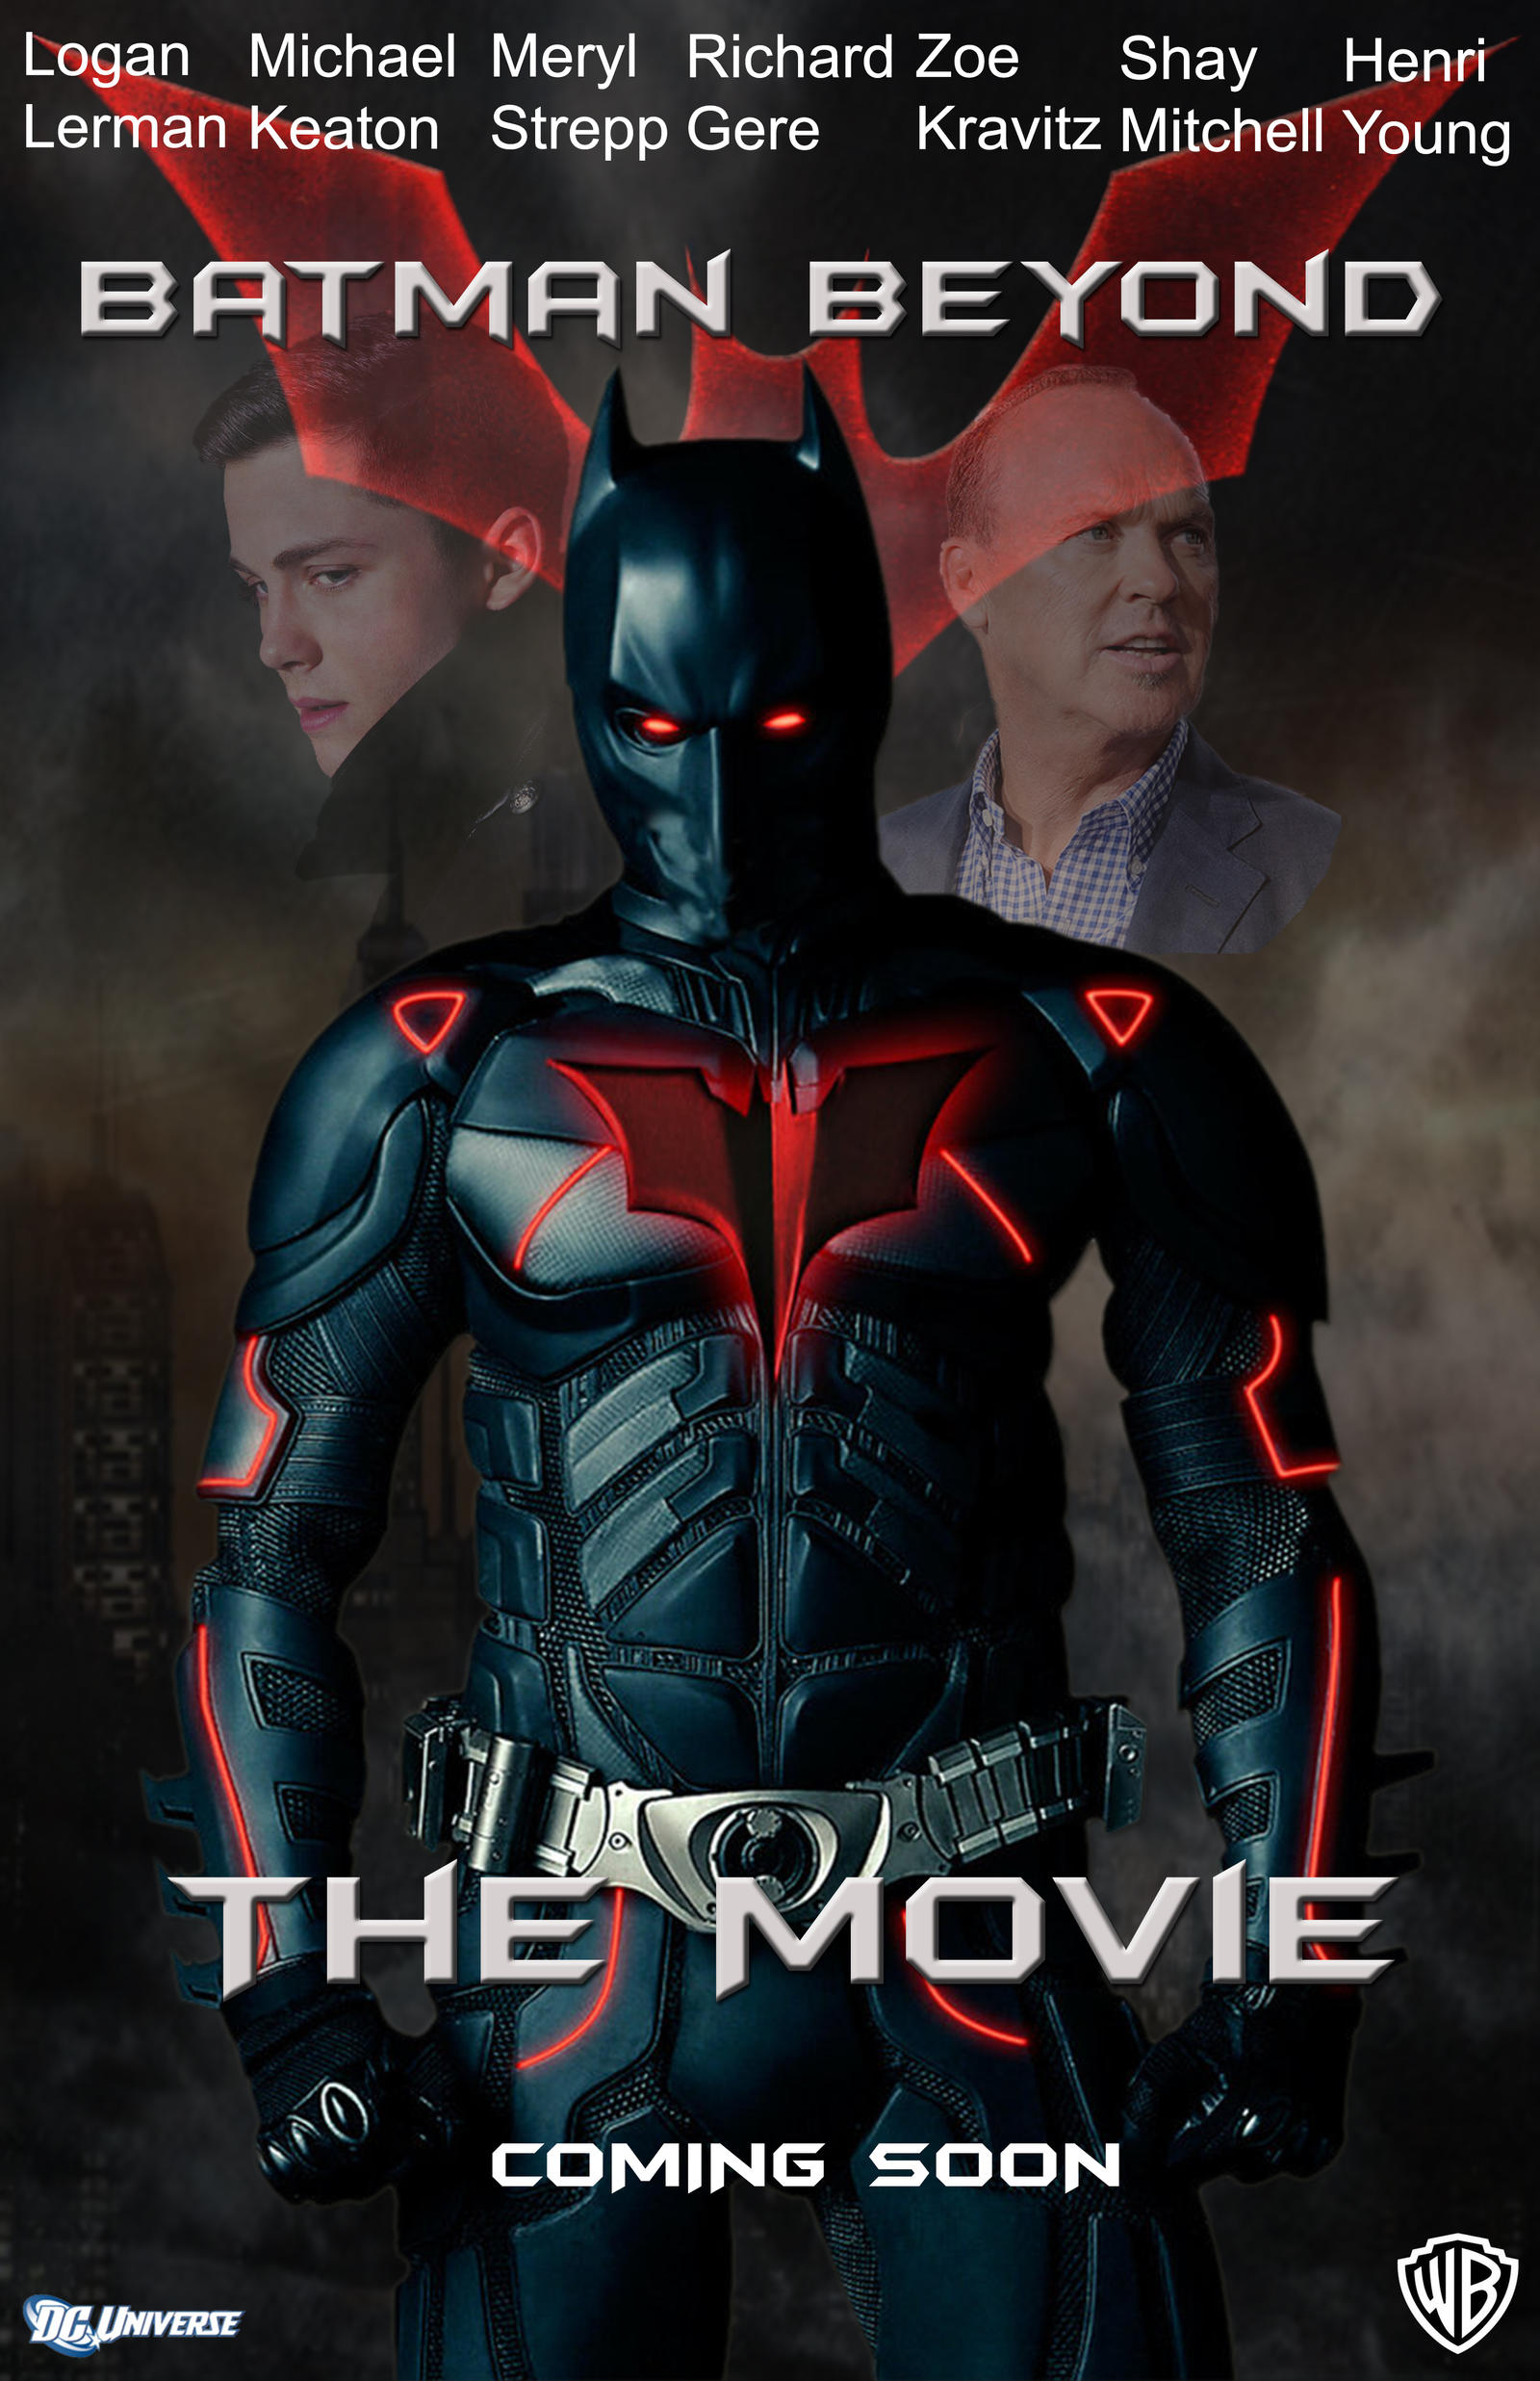 Batman Beyond Movie Poster: Original Look by madhatter139 on DeviantArt